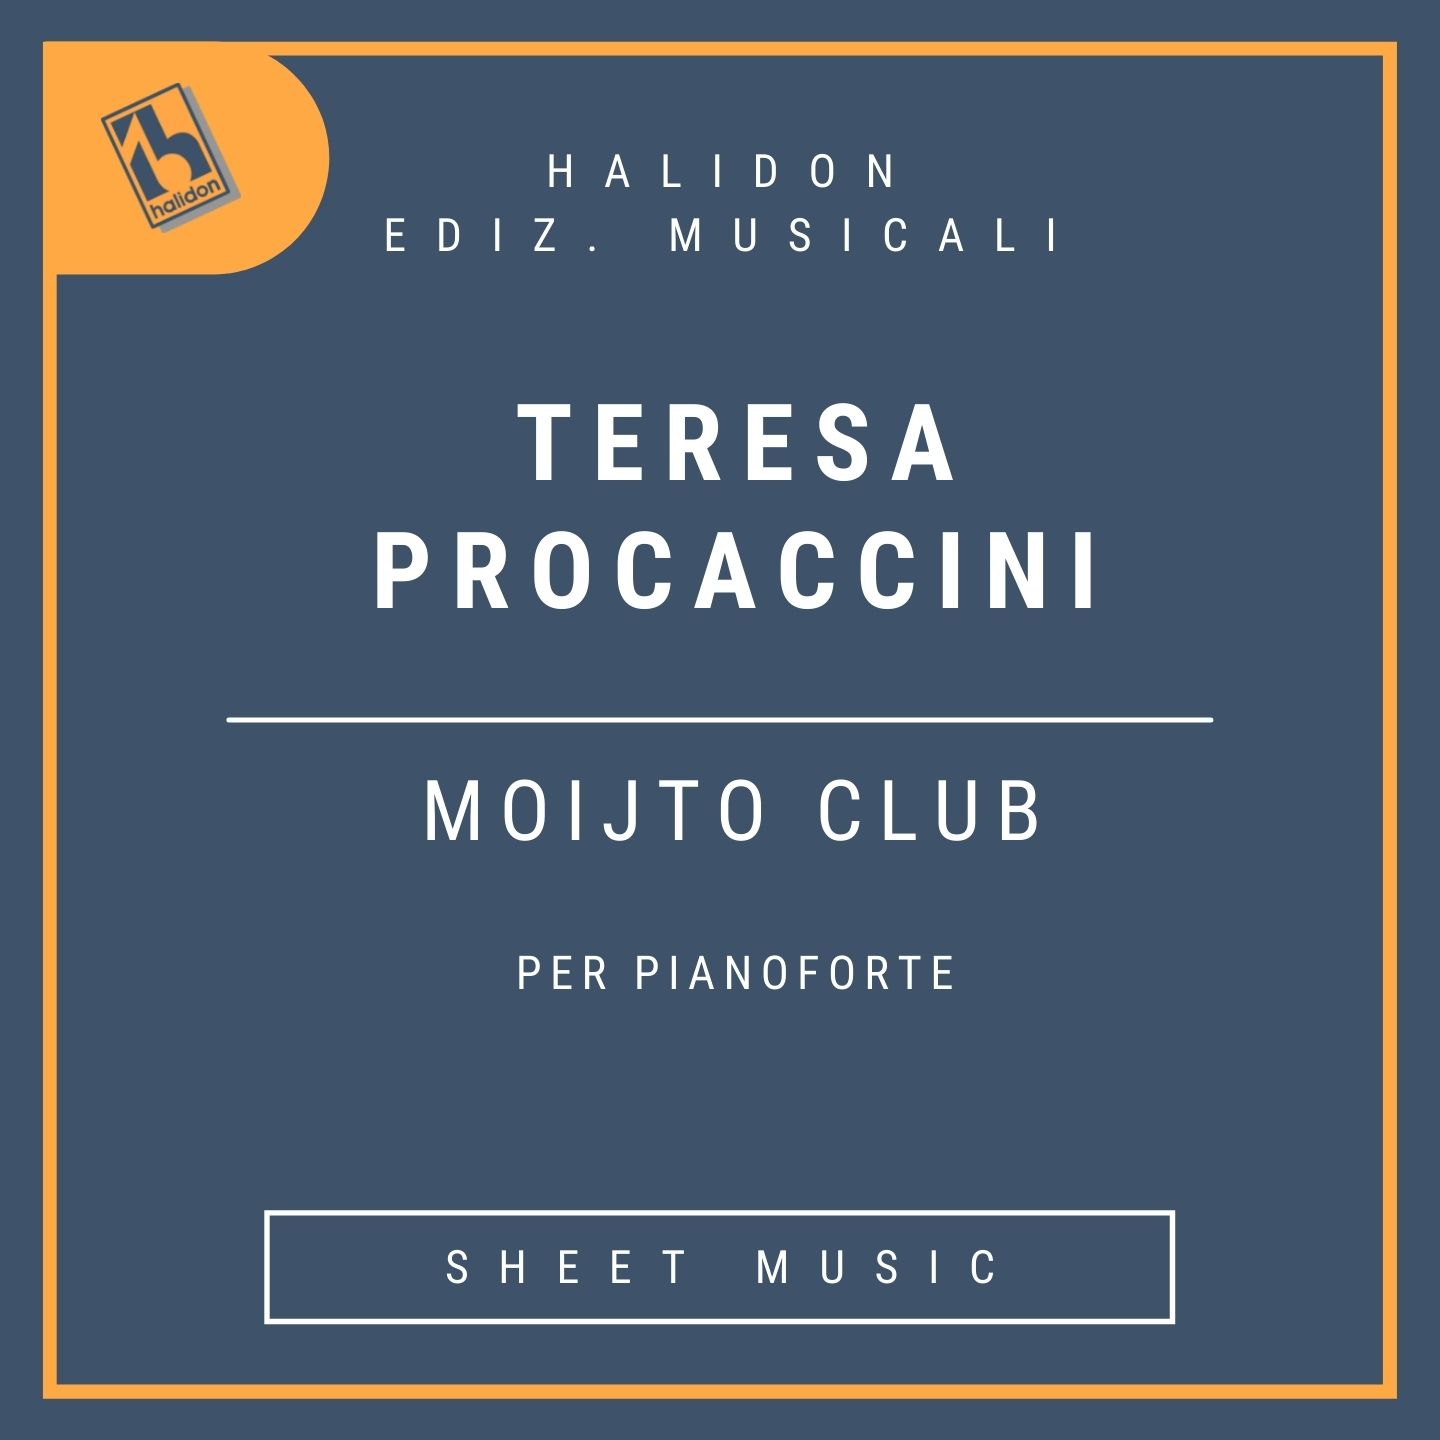 Teresa Procaccini - Moijto club